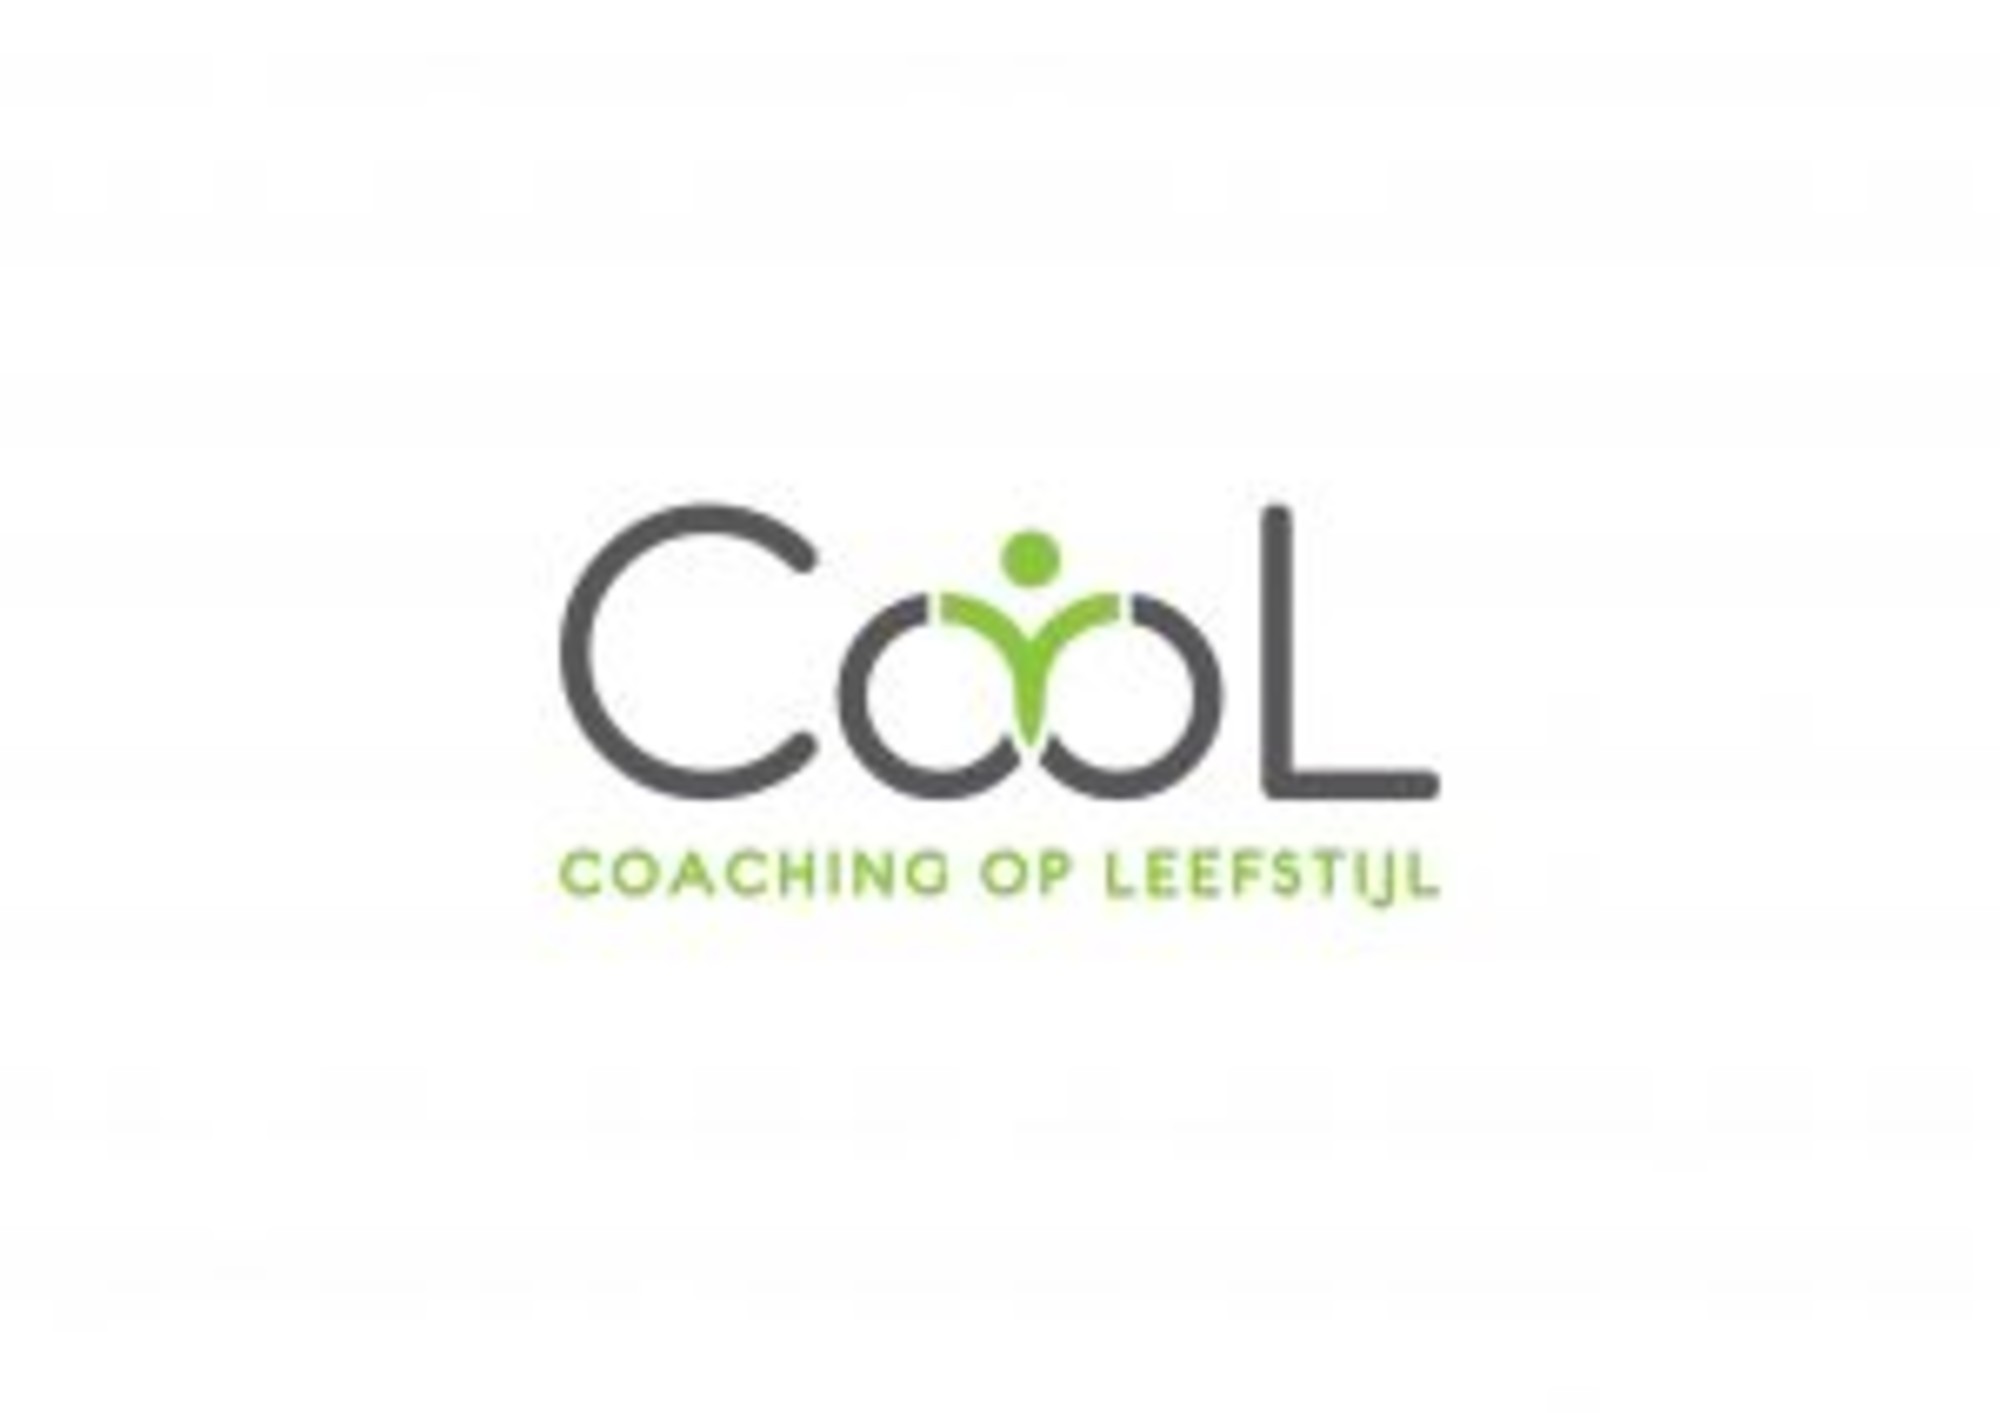 CooL Coaching op Leefstijl